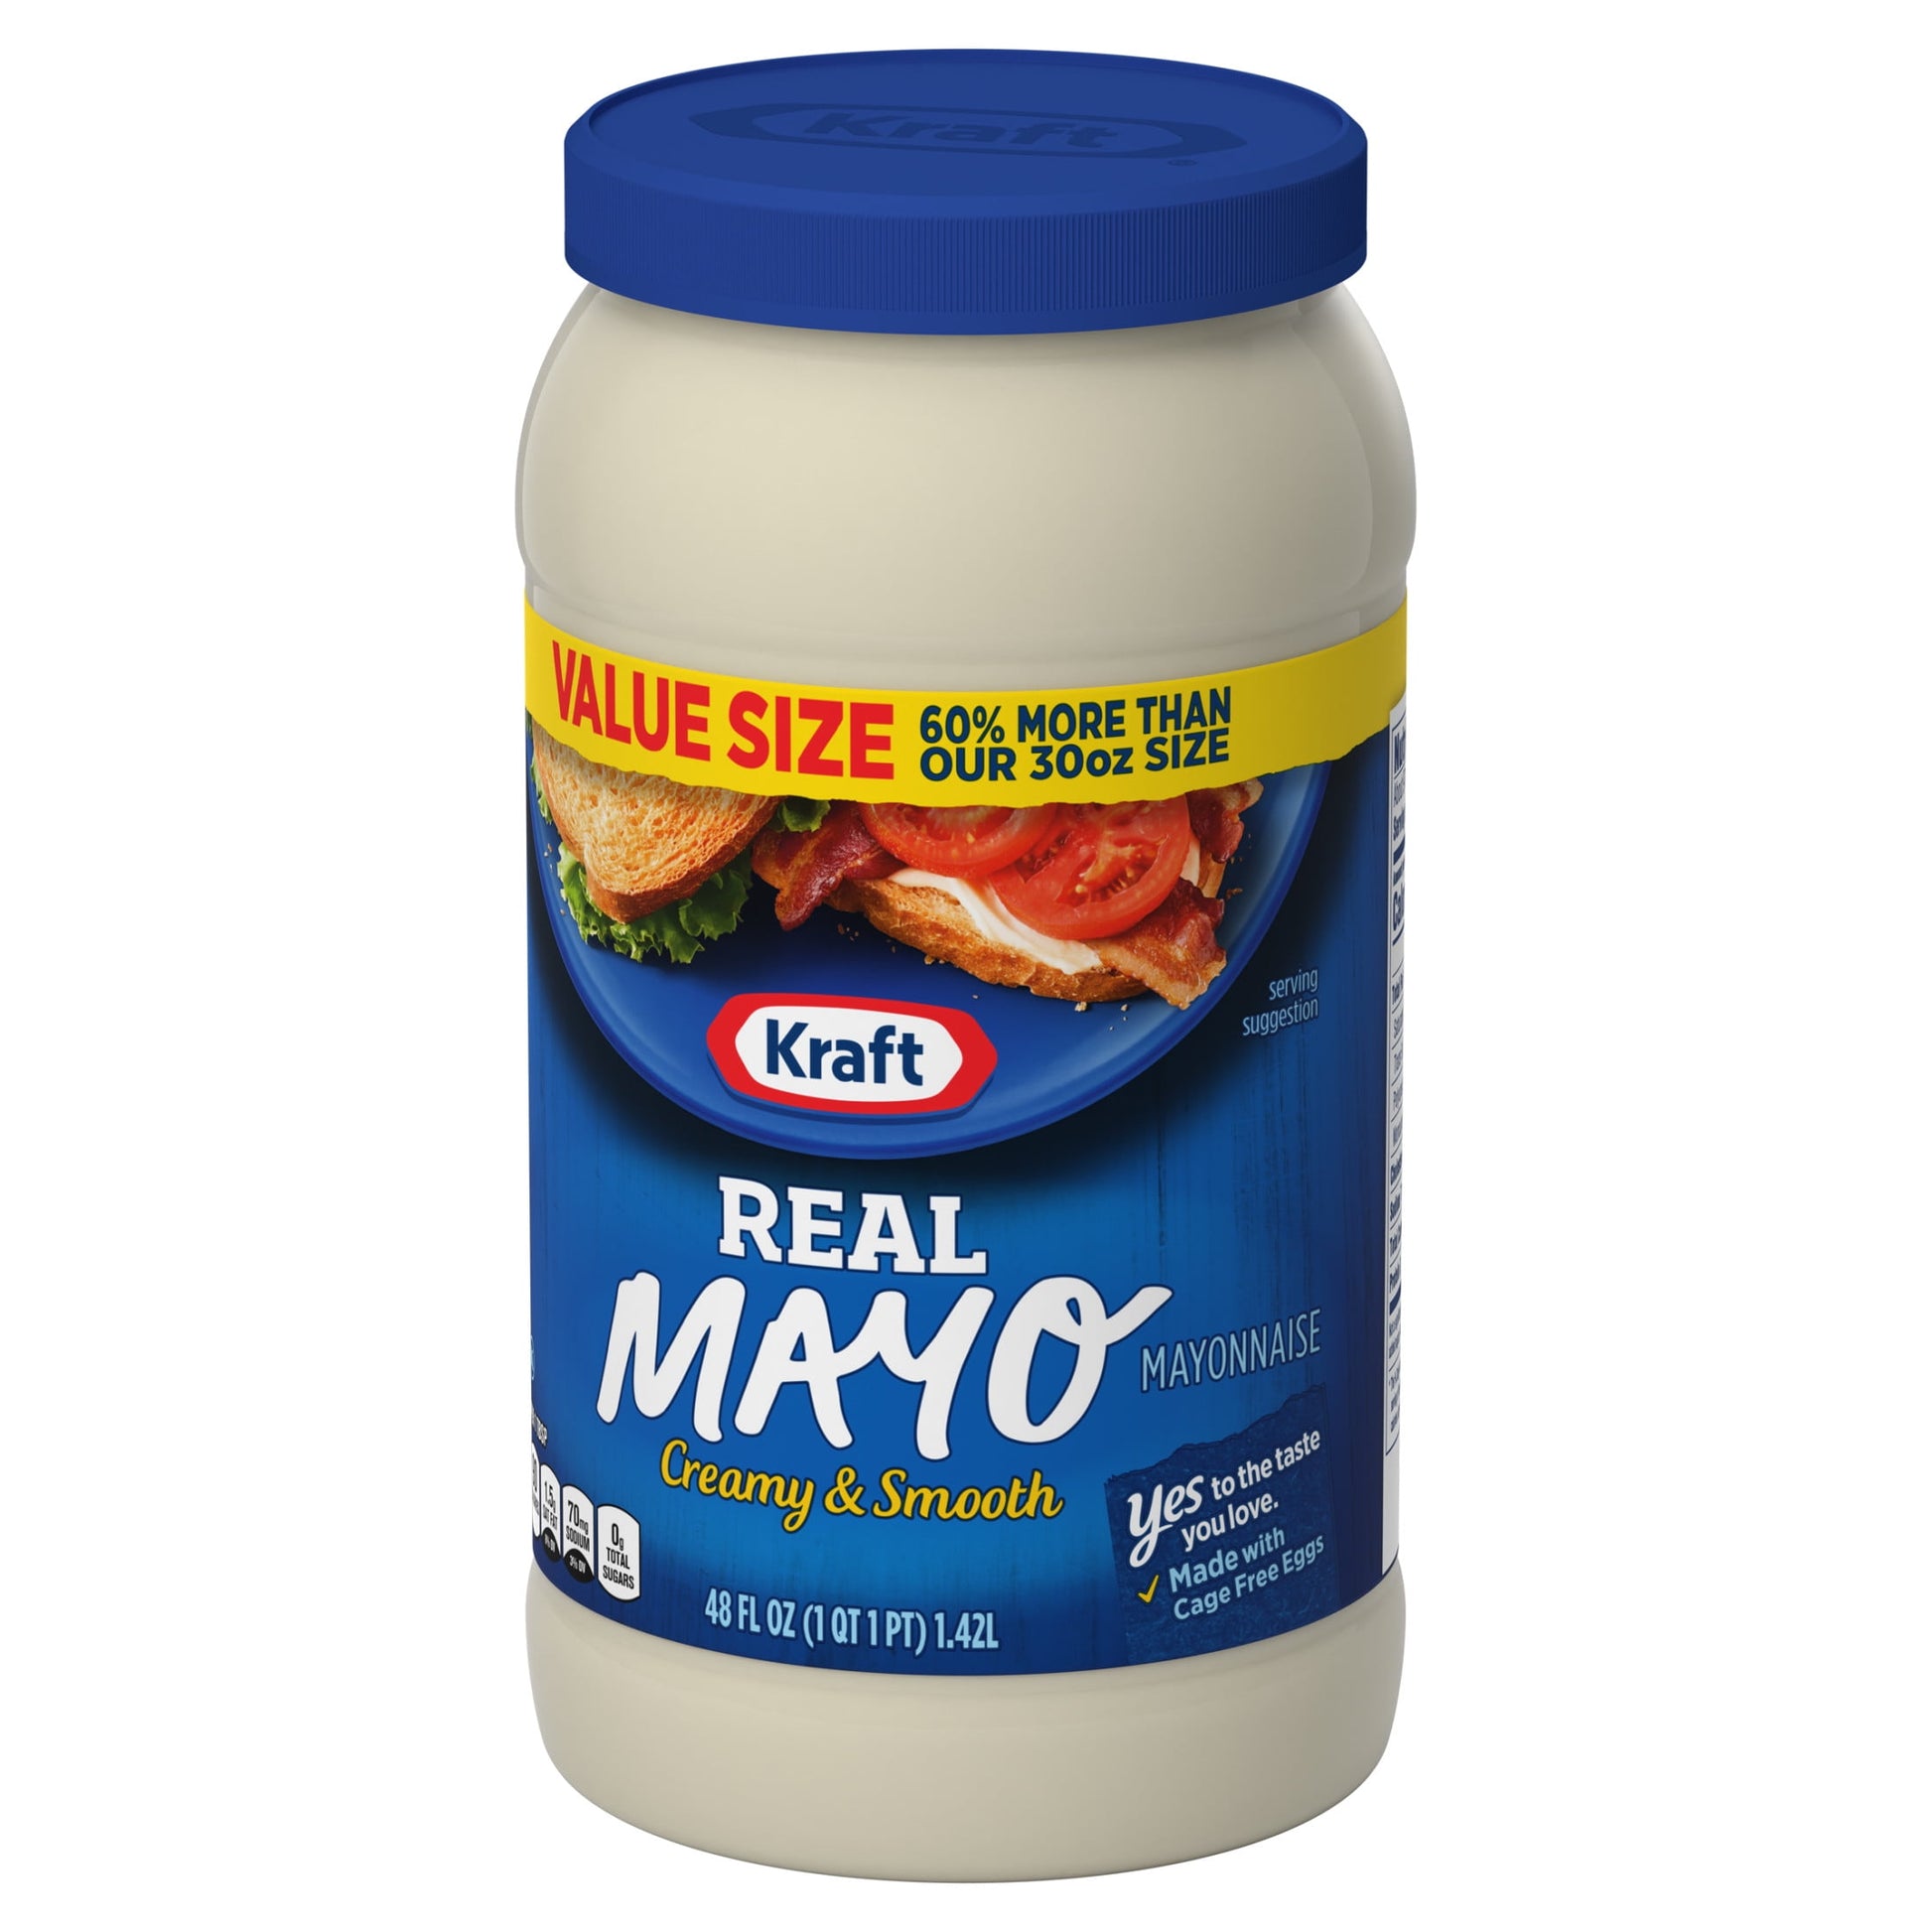 Real Mayo Creamy & Smooth Mayonnaise, 48 Fl Oz Jar